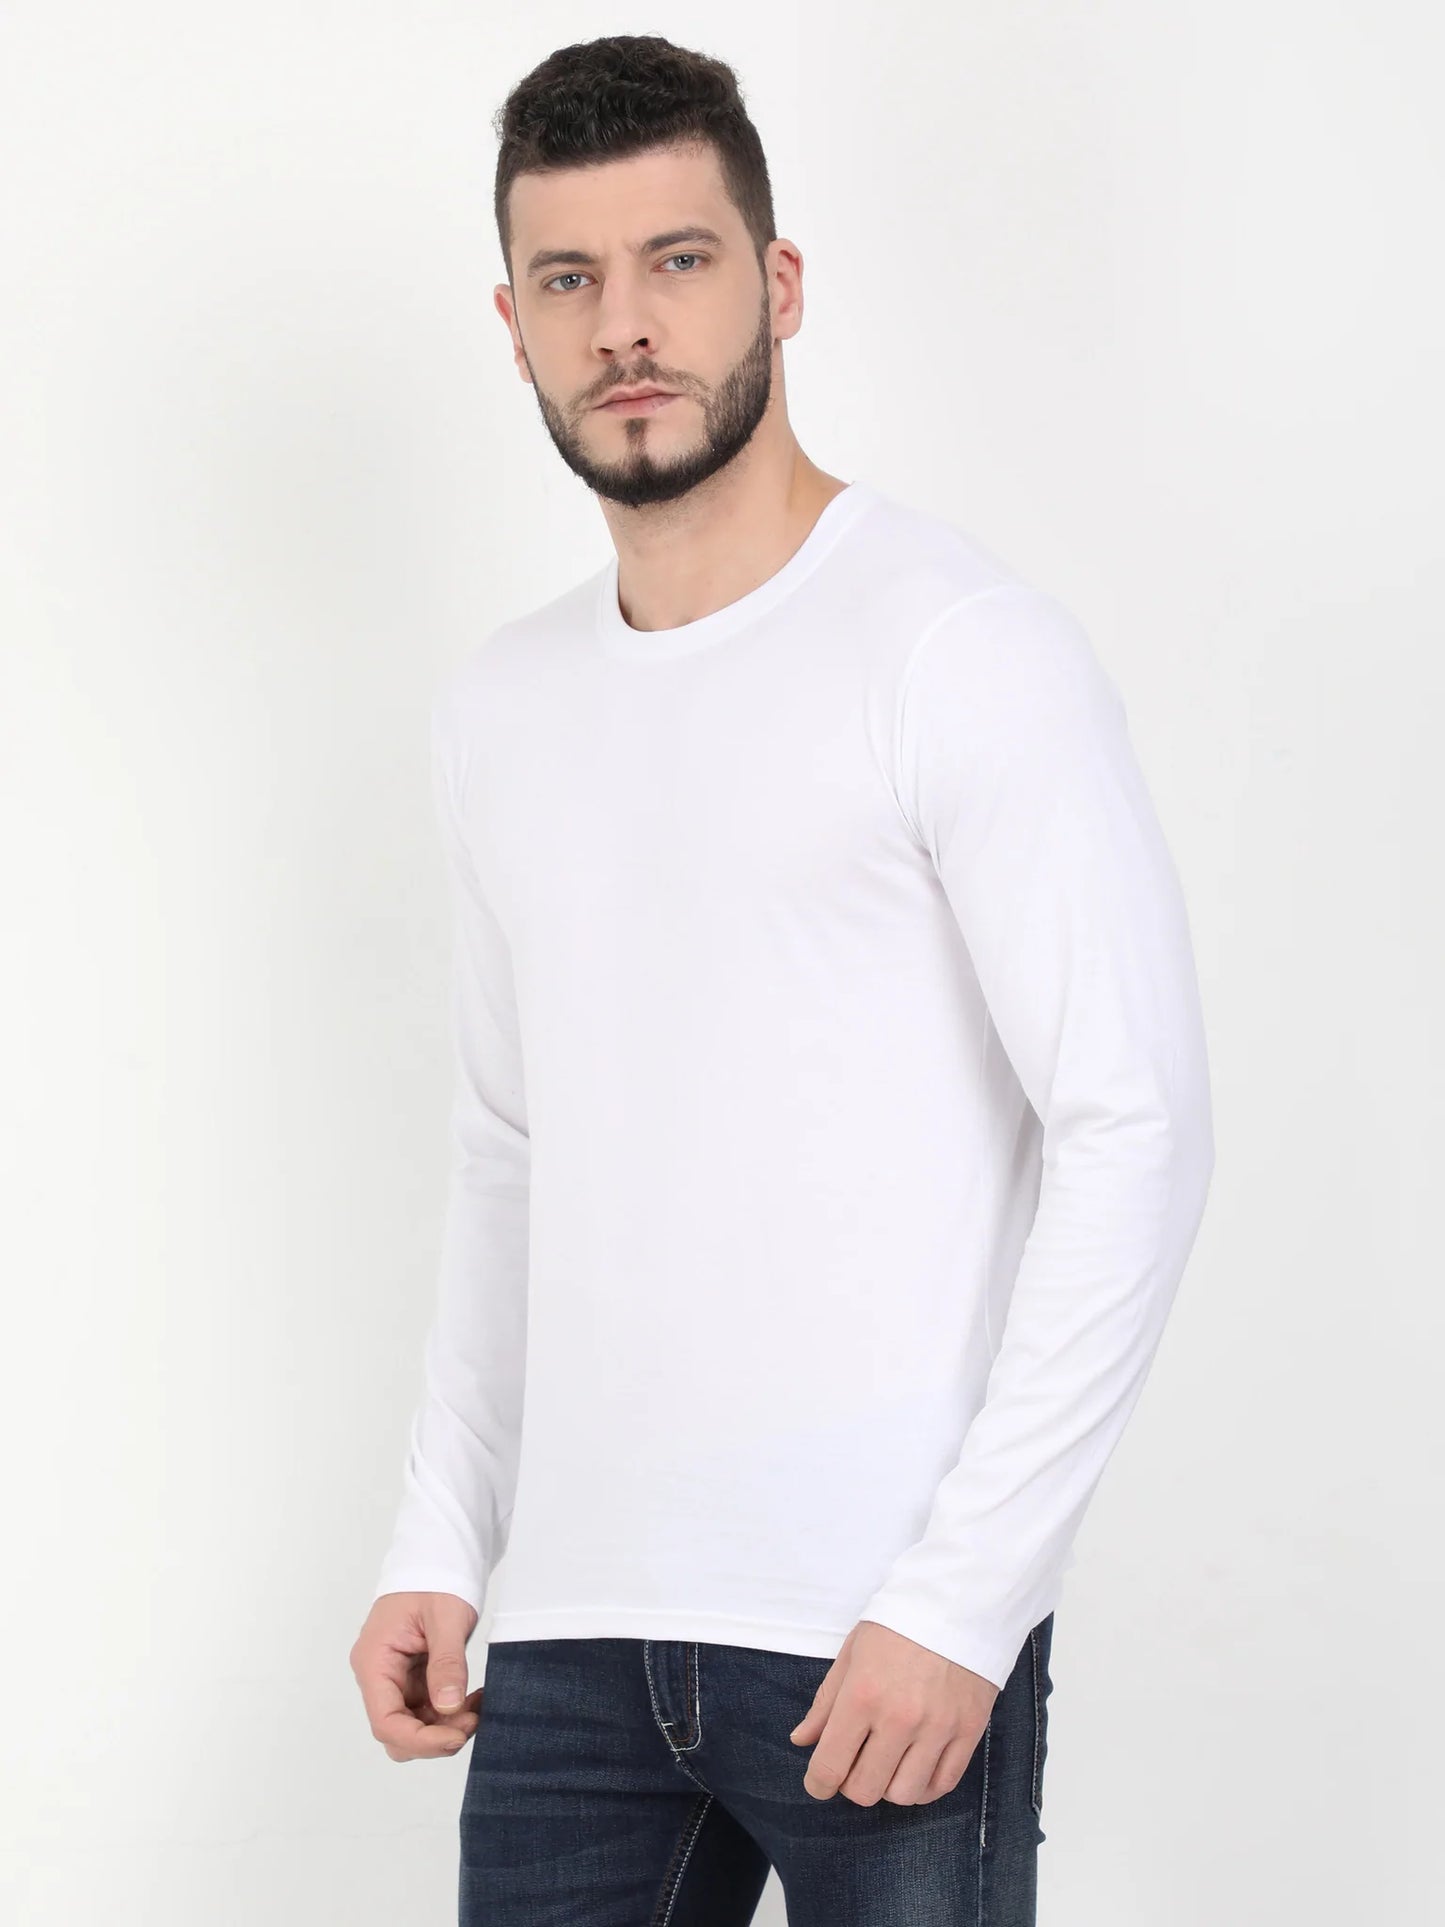 Men's Cotton Plain Round Neck Full Sleeve White Color T-Shirt